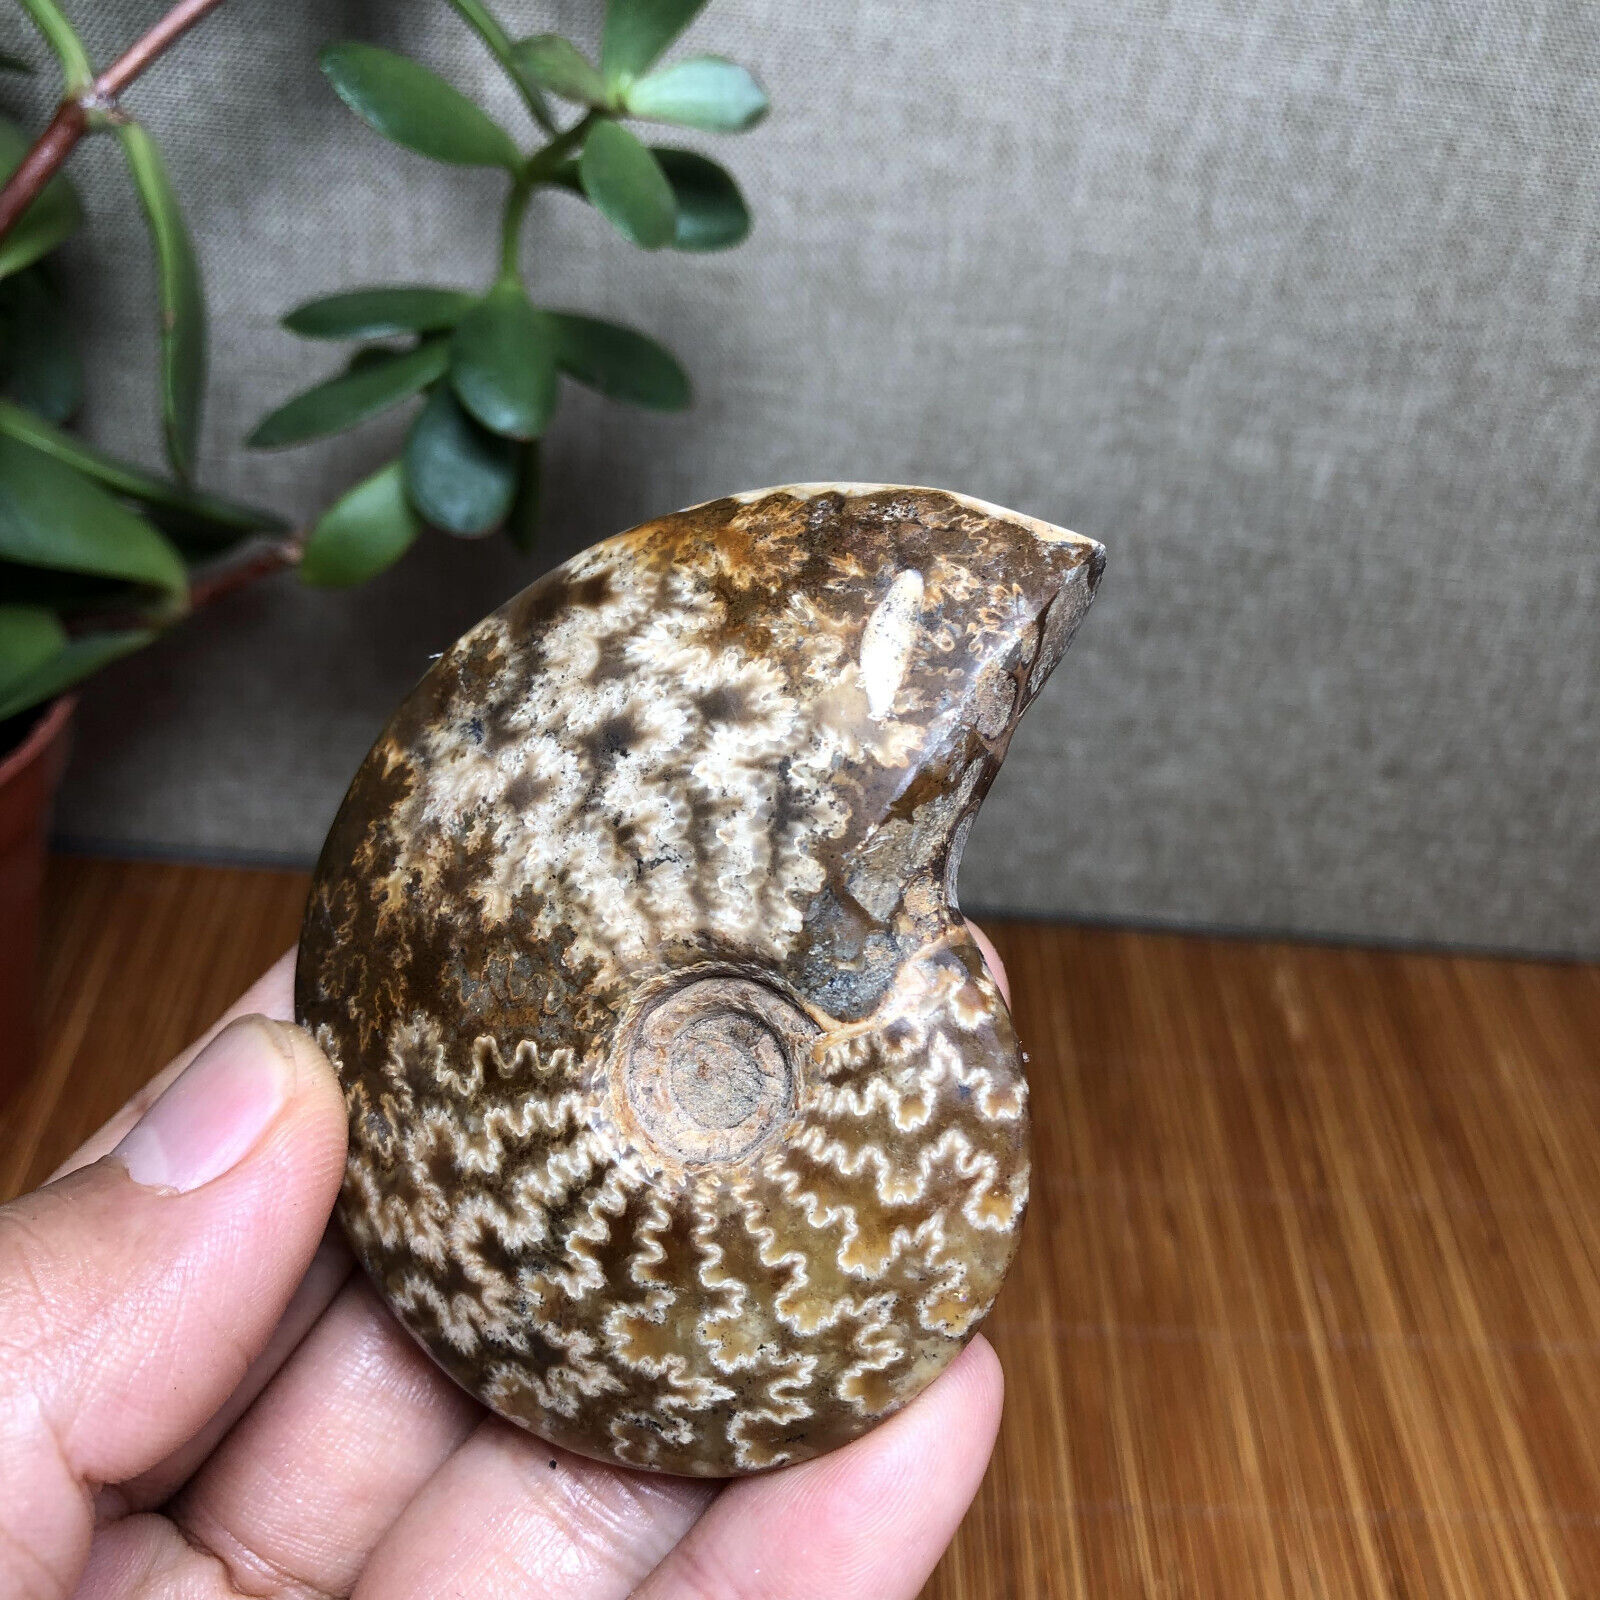 67mm Top rare Natural conch ammonite fossil specimens Madagascar 85g A2713